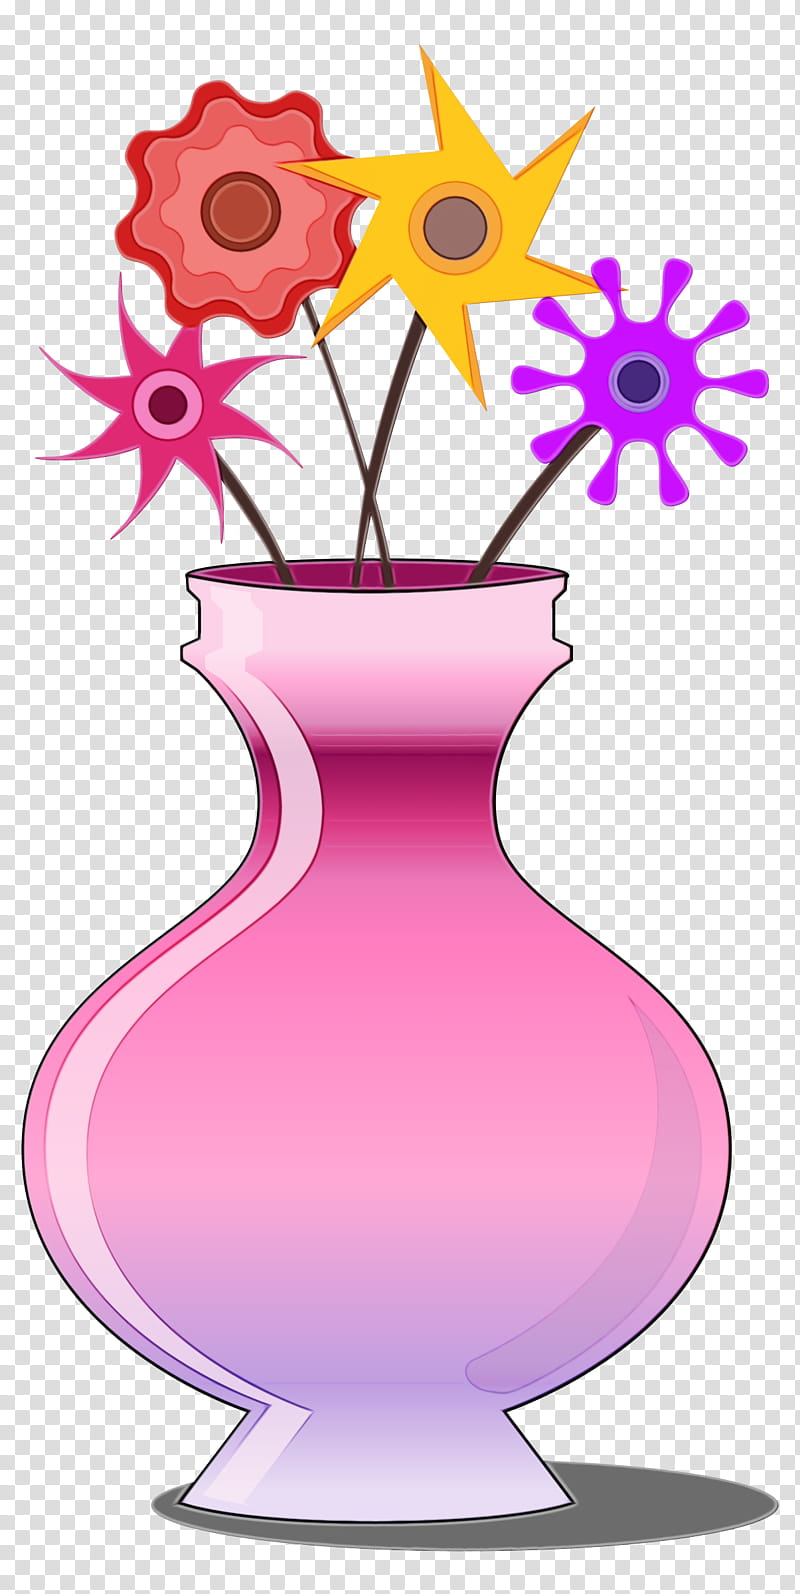 Watercolor Floral, Paint, Wet Ink, Floral Design, Vase, Pink M, Magenta, Material Property transparent background PNG clipart